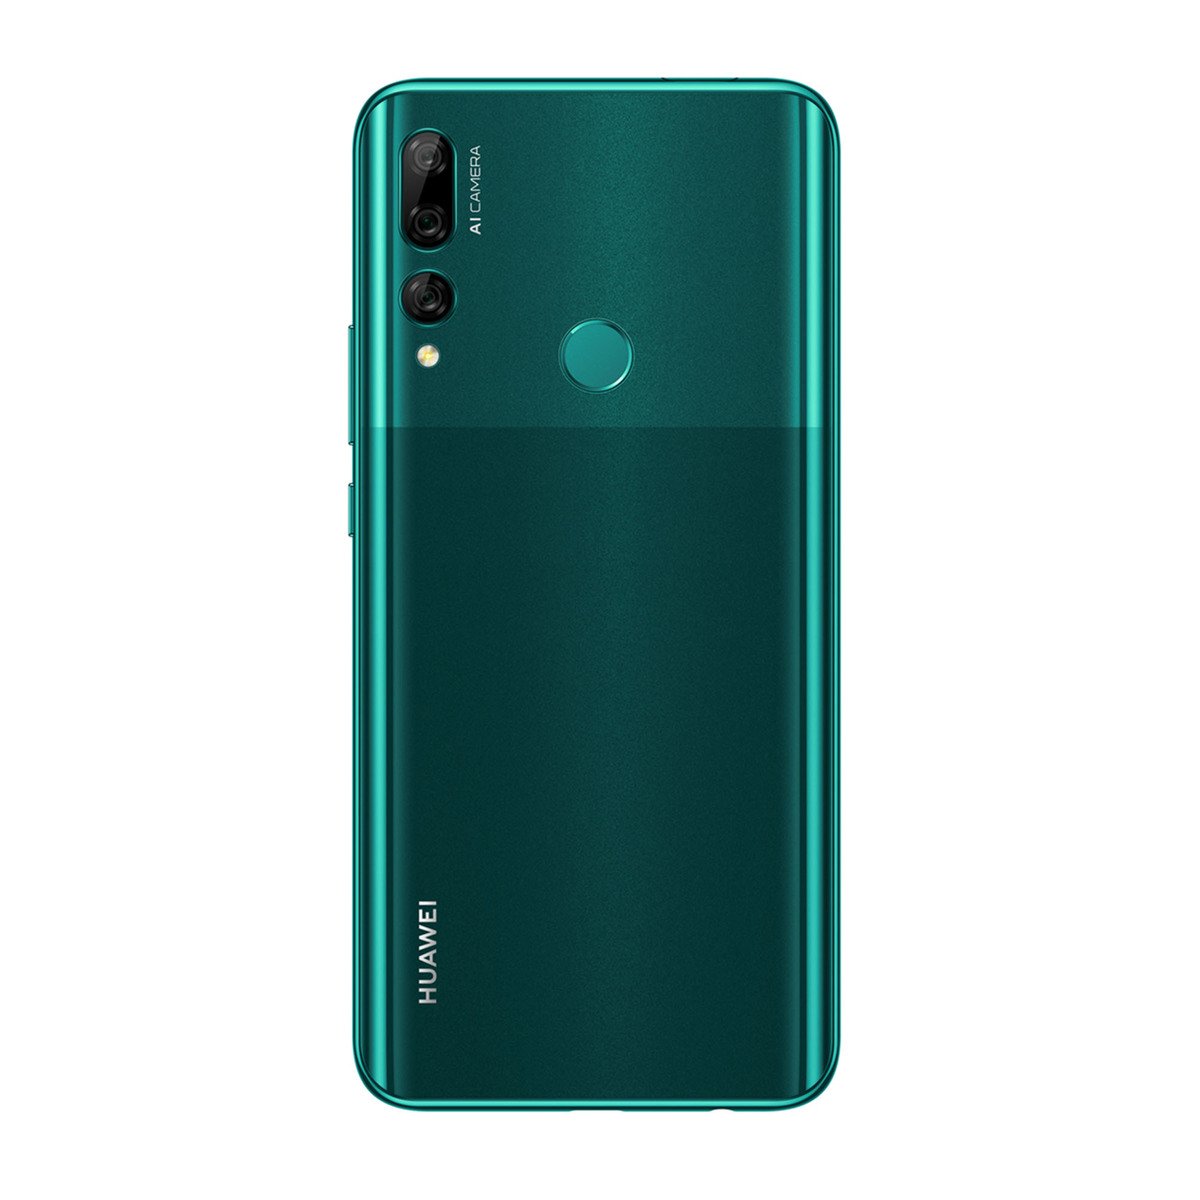 Huawei Y9 Prime (2019) 128GB Emerald Green